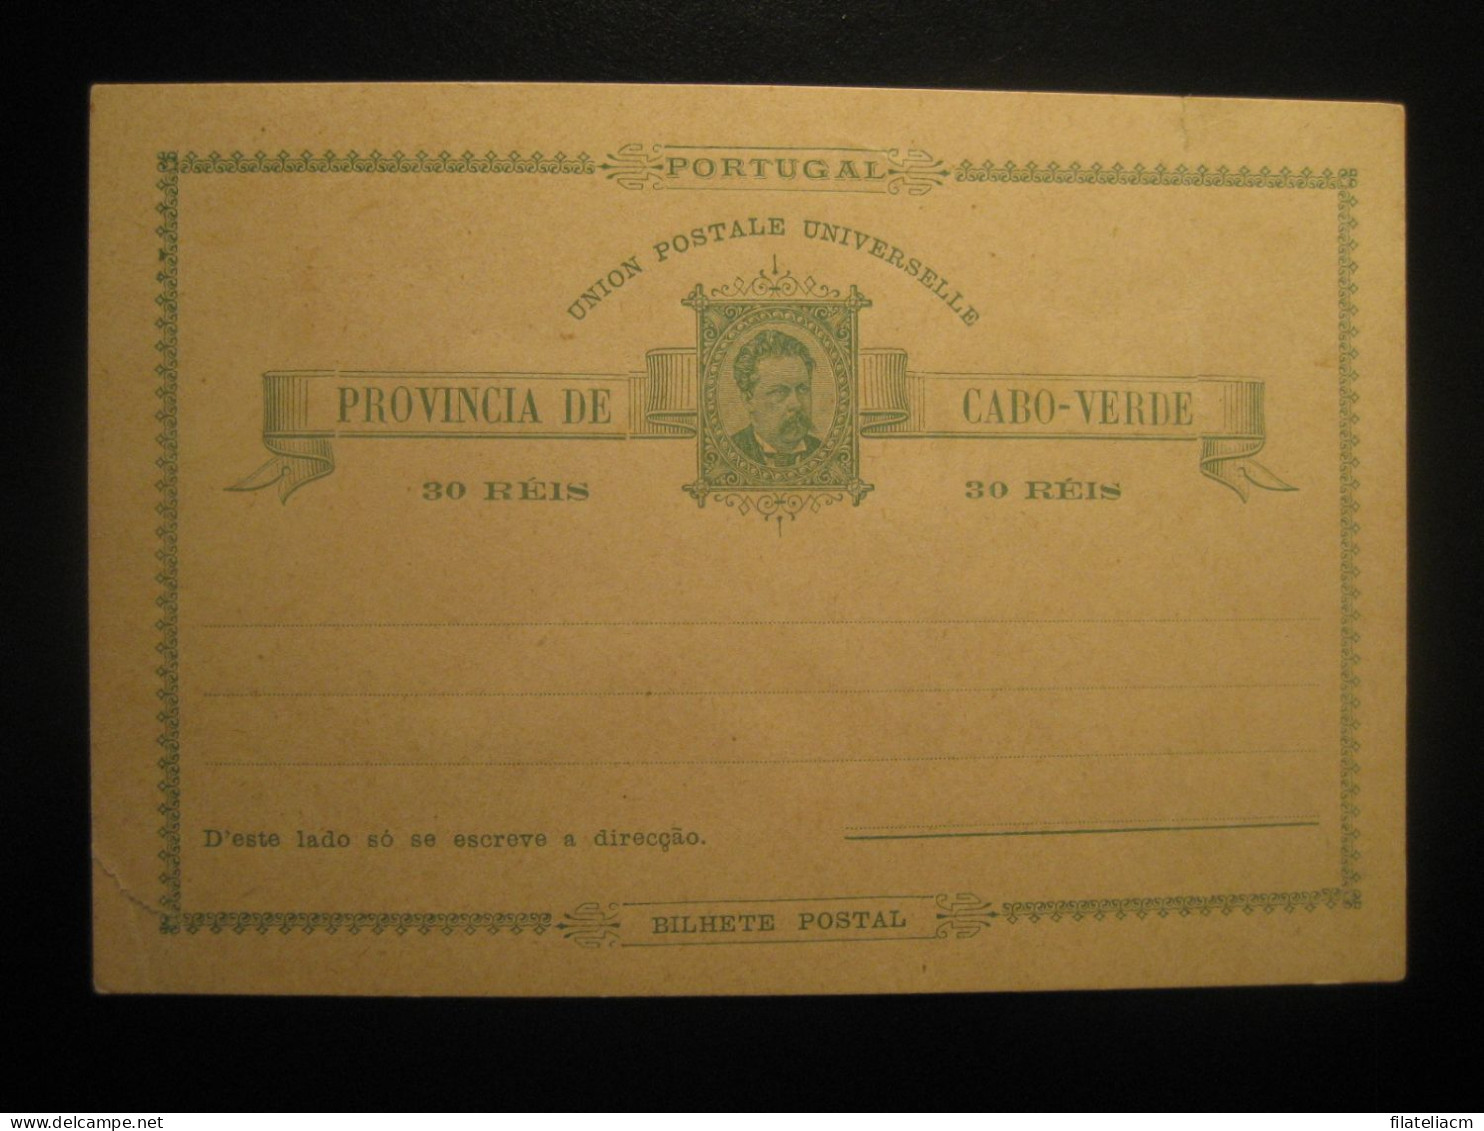 CABO VERDE 30 Reis UPU Bilhete Postal Postal Stationery Card Folded Slight Faults Portuguese Colonies Portugal Area - Cape Verde